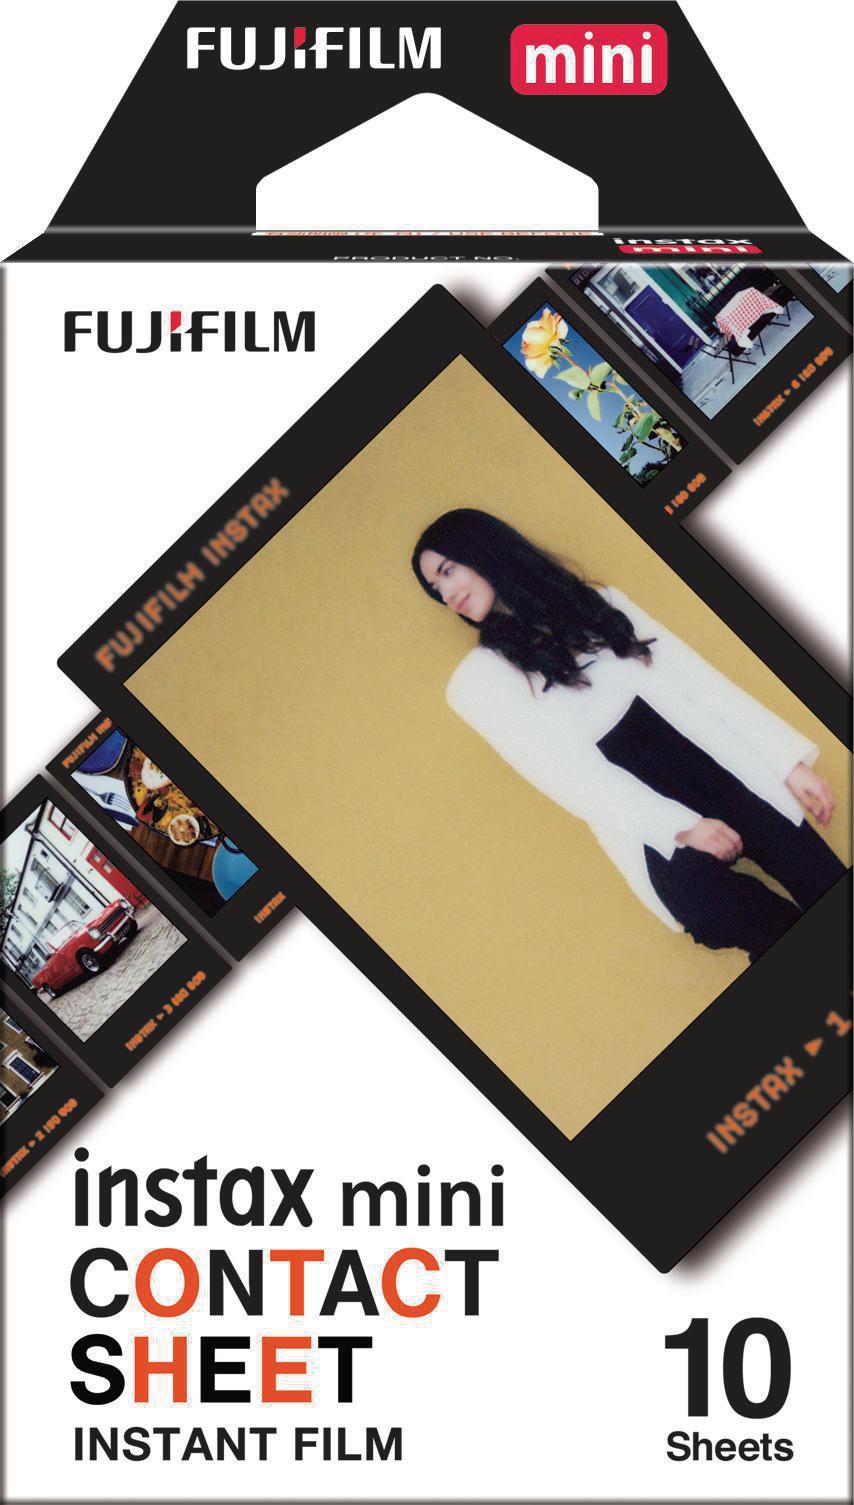 mini FUJIFILM Film Sofortbildfilm Contact Sheet instax